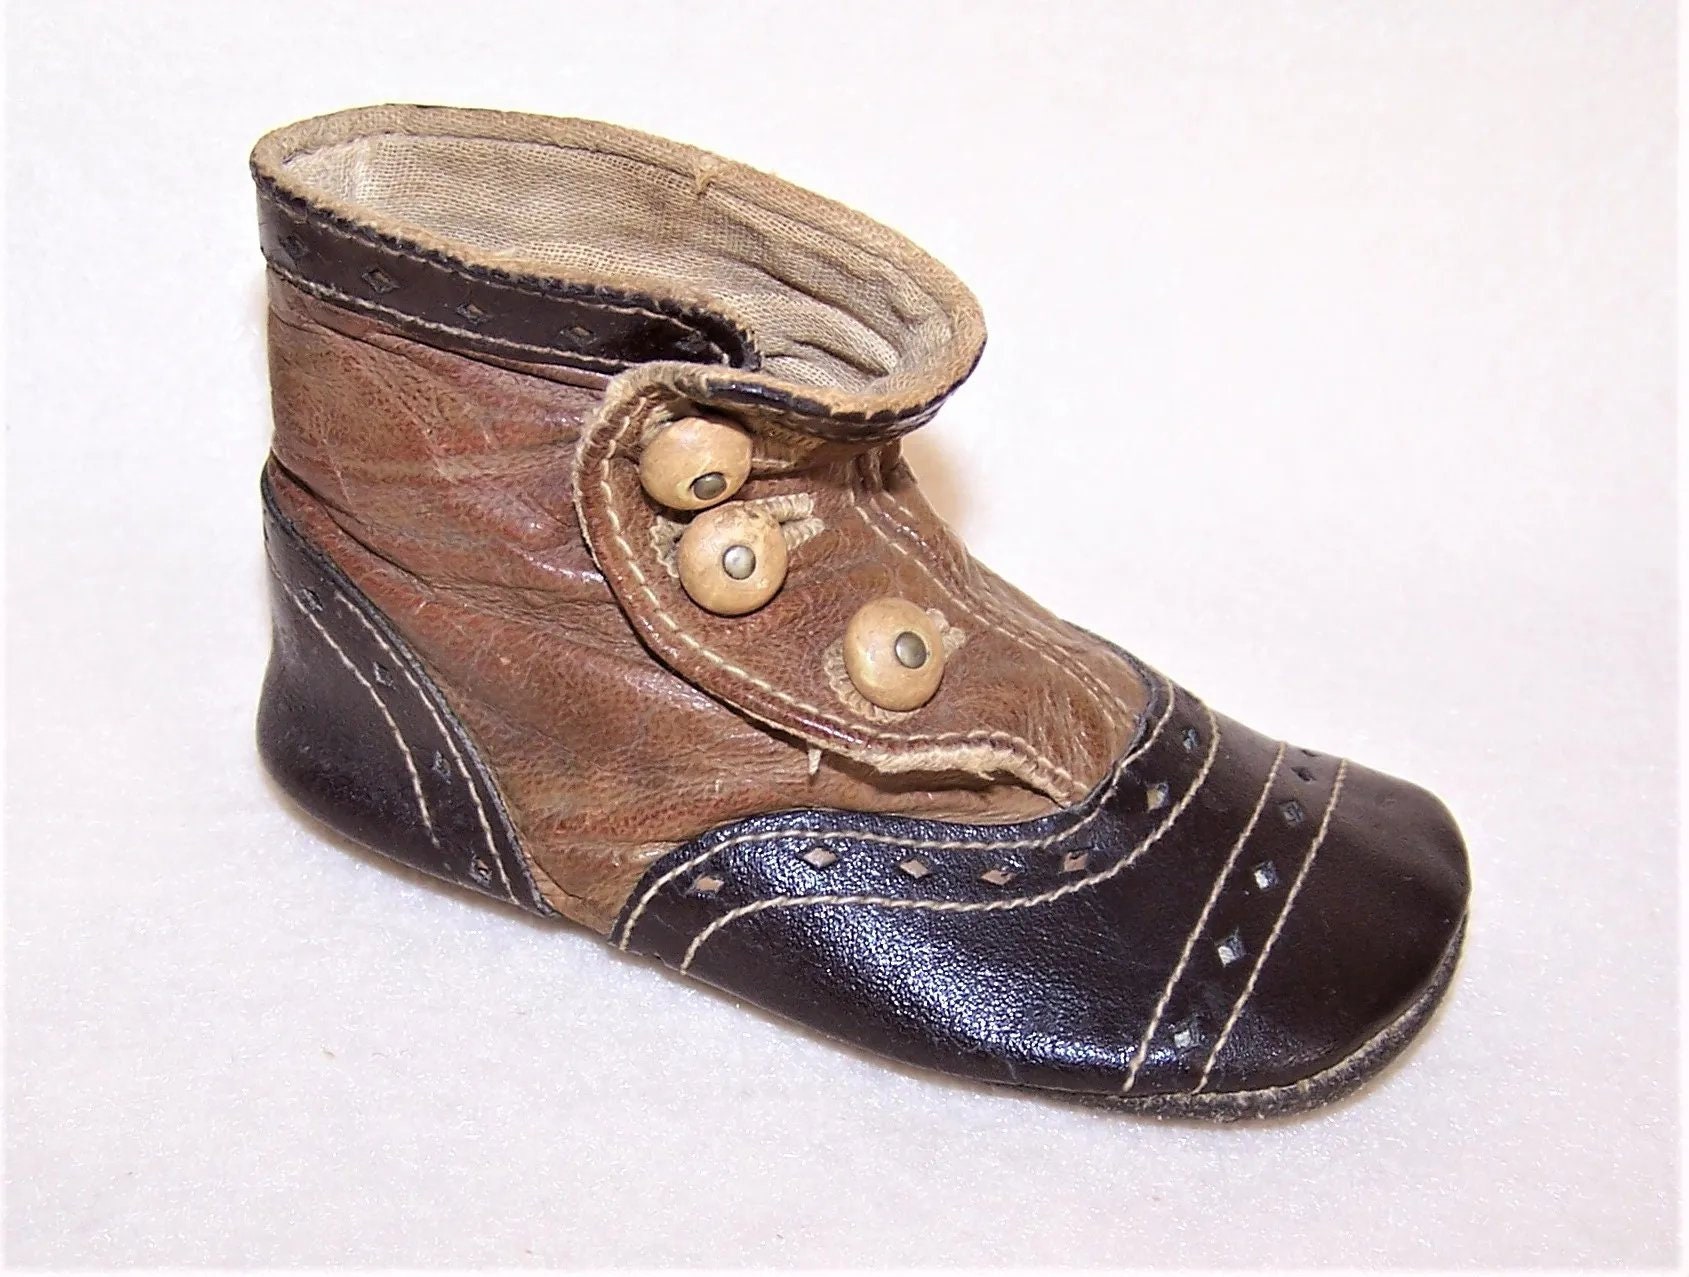 Schoenen Meisjesschoenen Laarzen Black Girl's Lace-Up High Top Boots Patent Leather tips Antique Victorian Children's Victorian Edwardian Shoes 